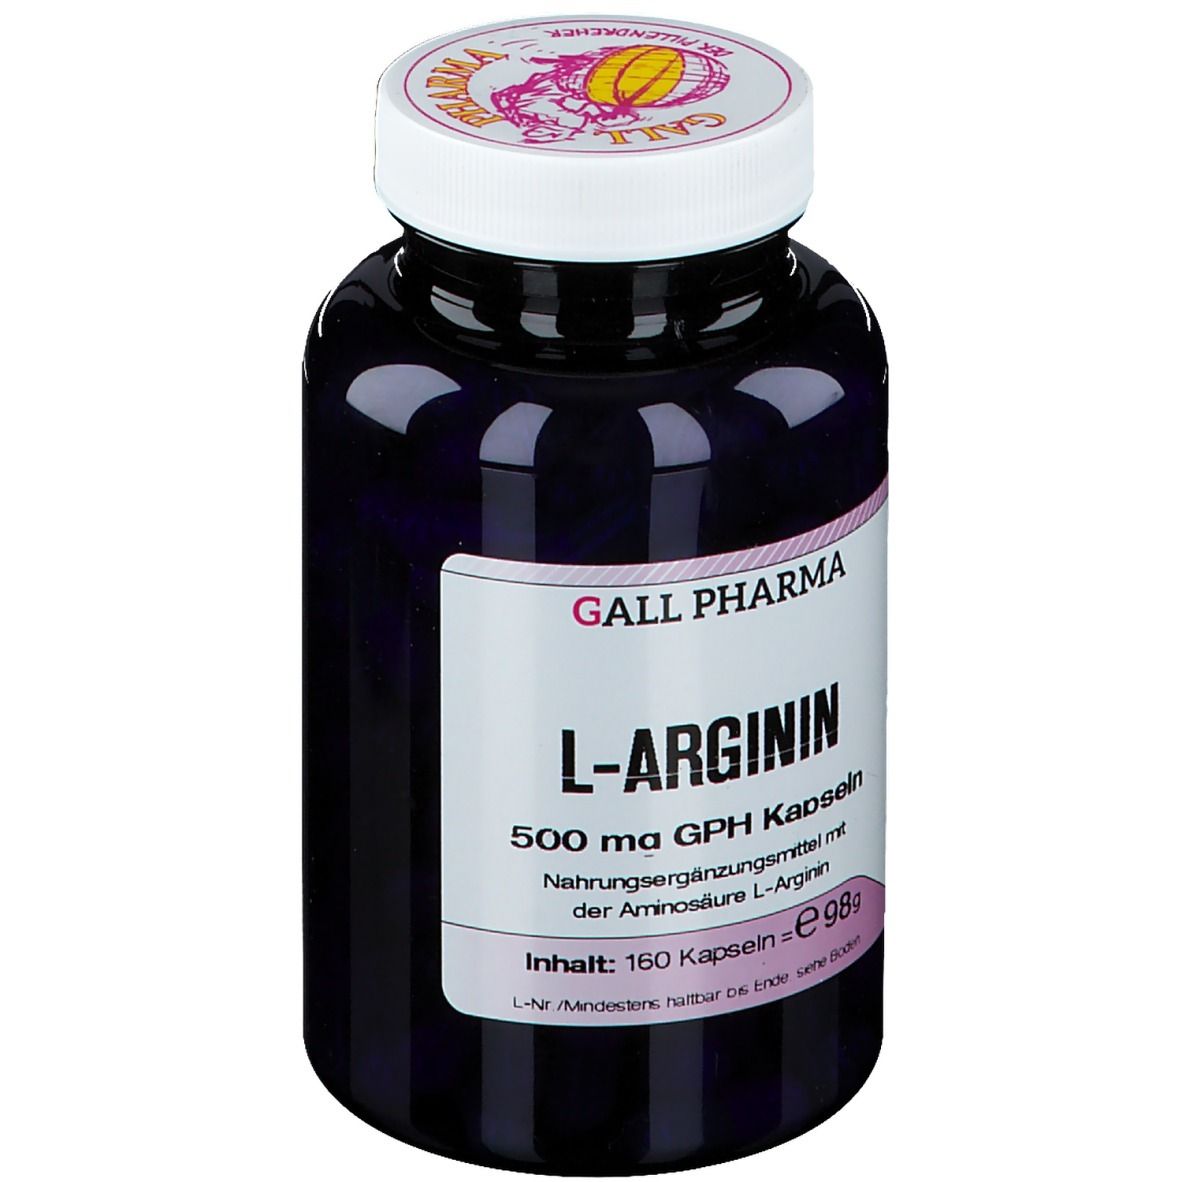 GALL PHARMA L-Arginin 500 mg